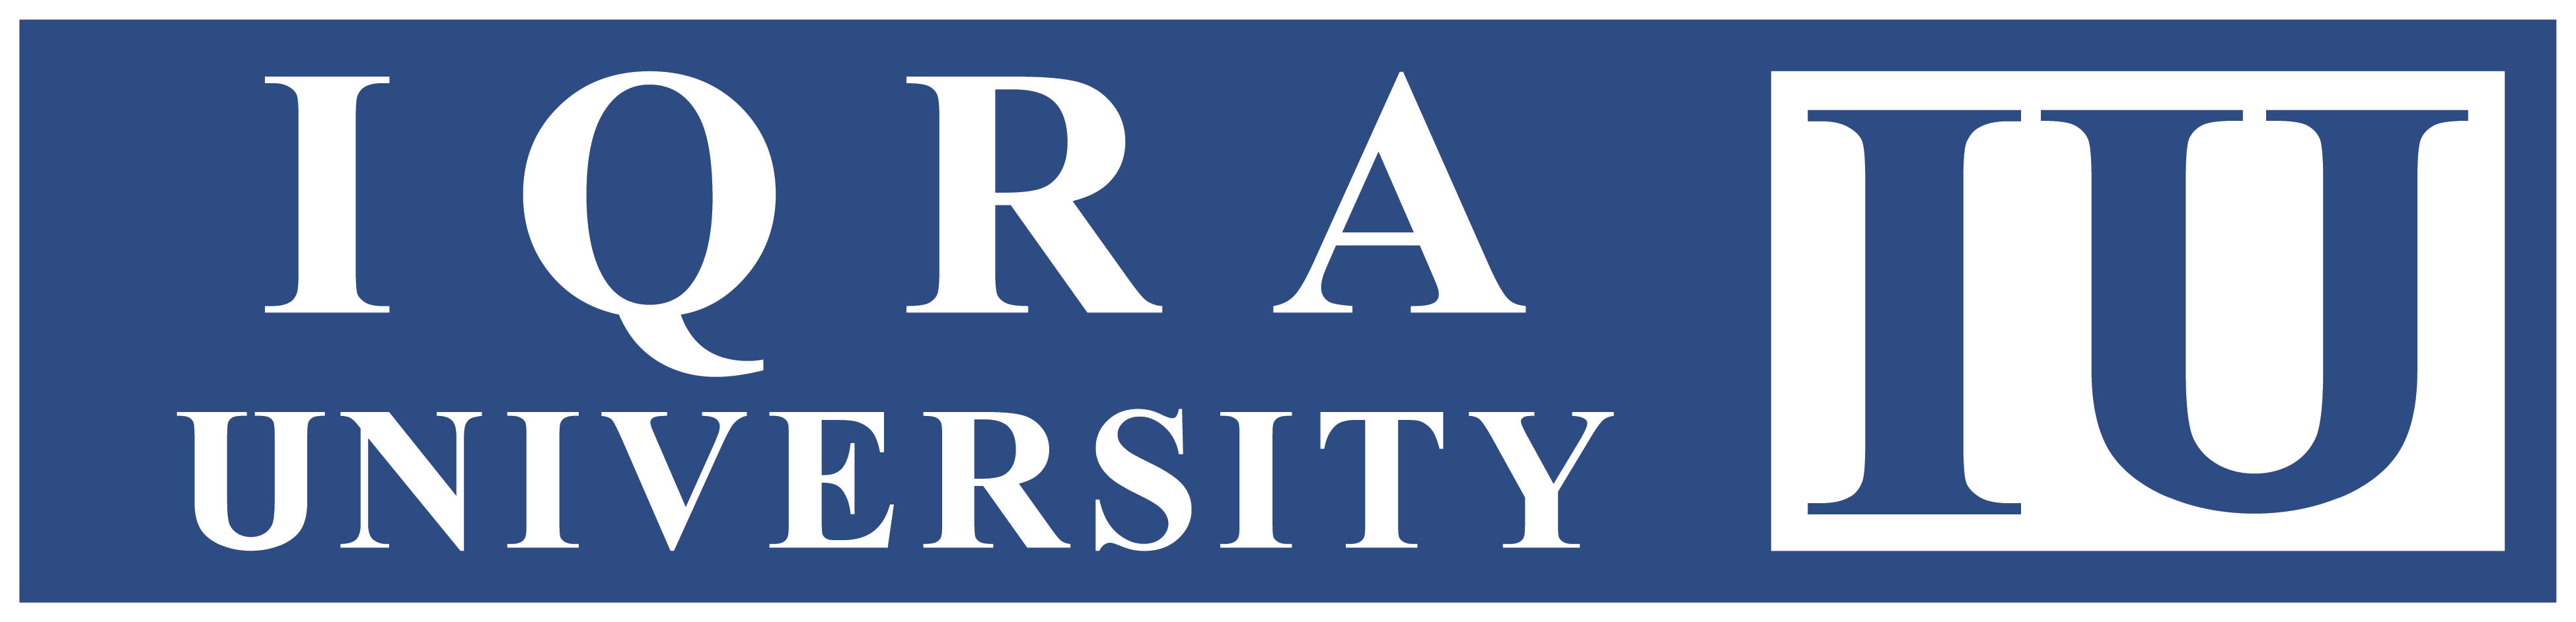 Iqra university logo